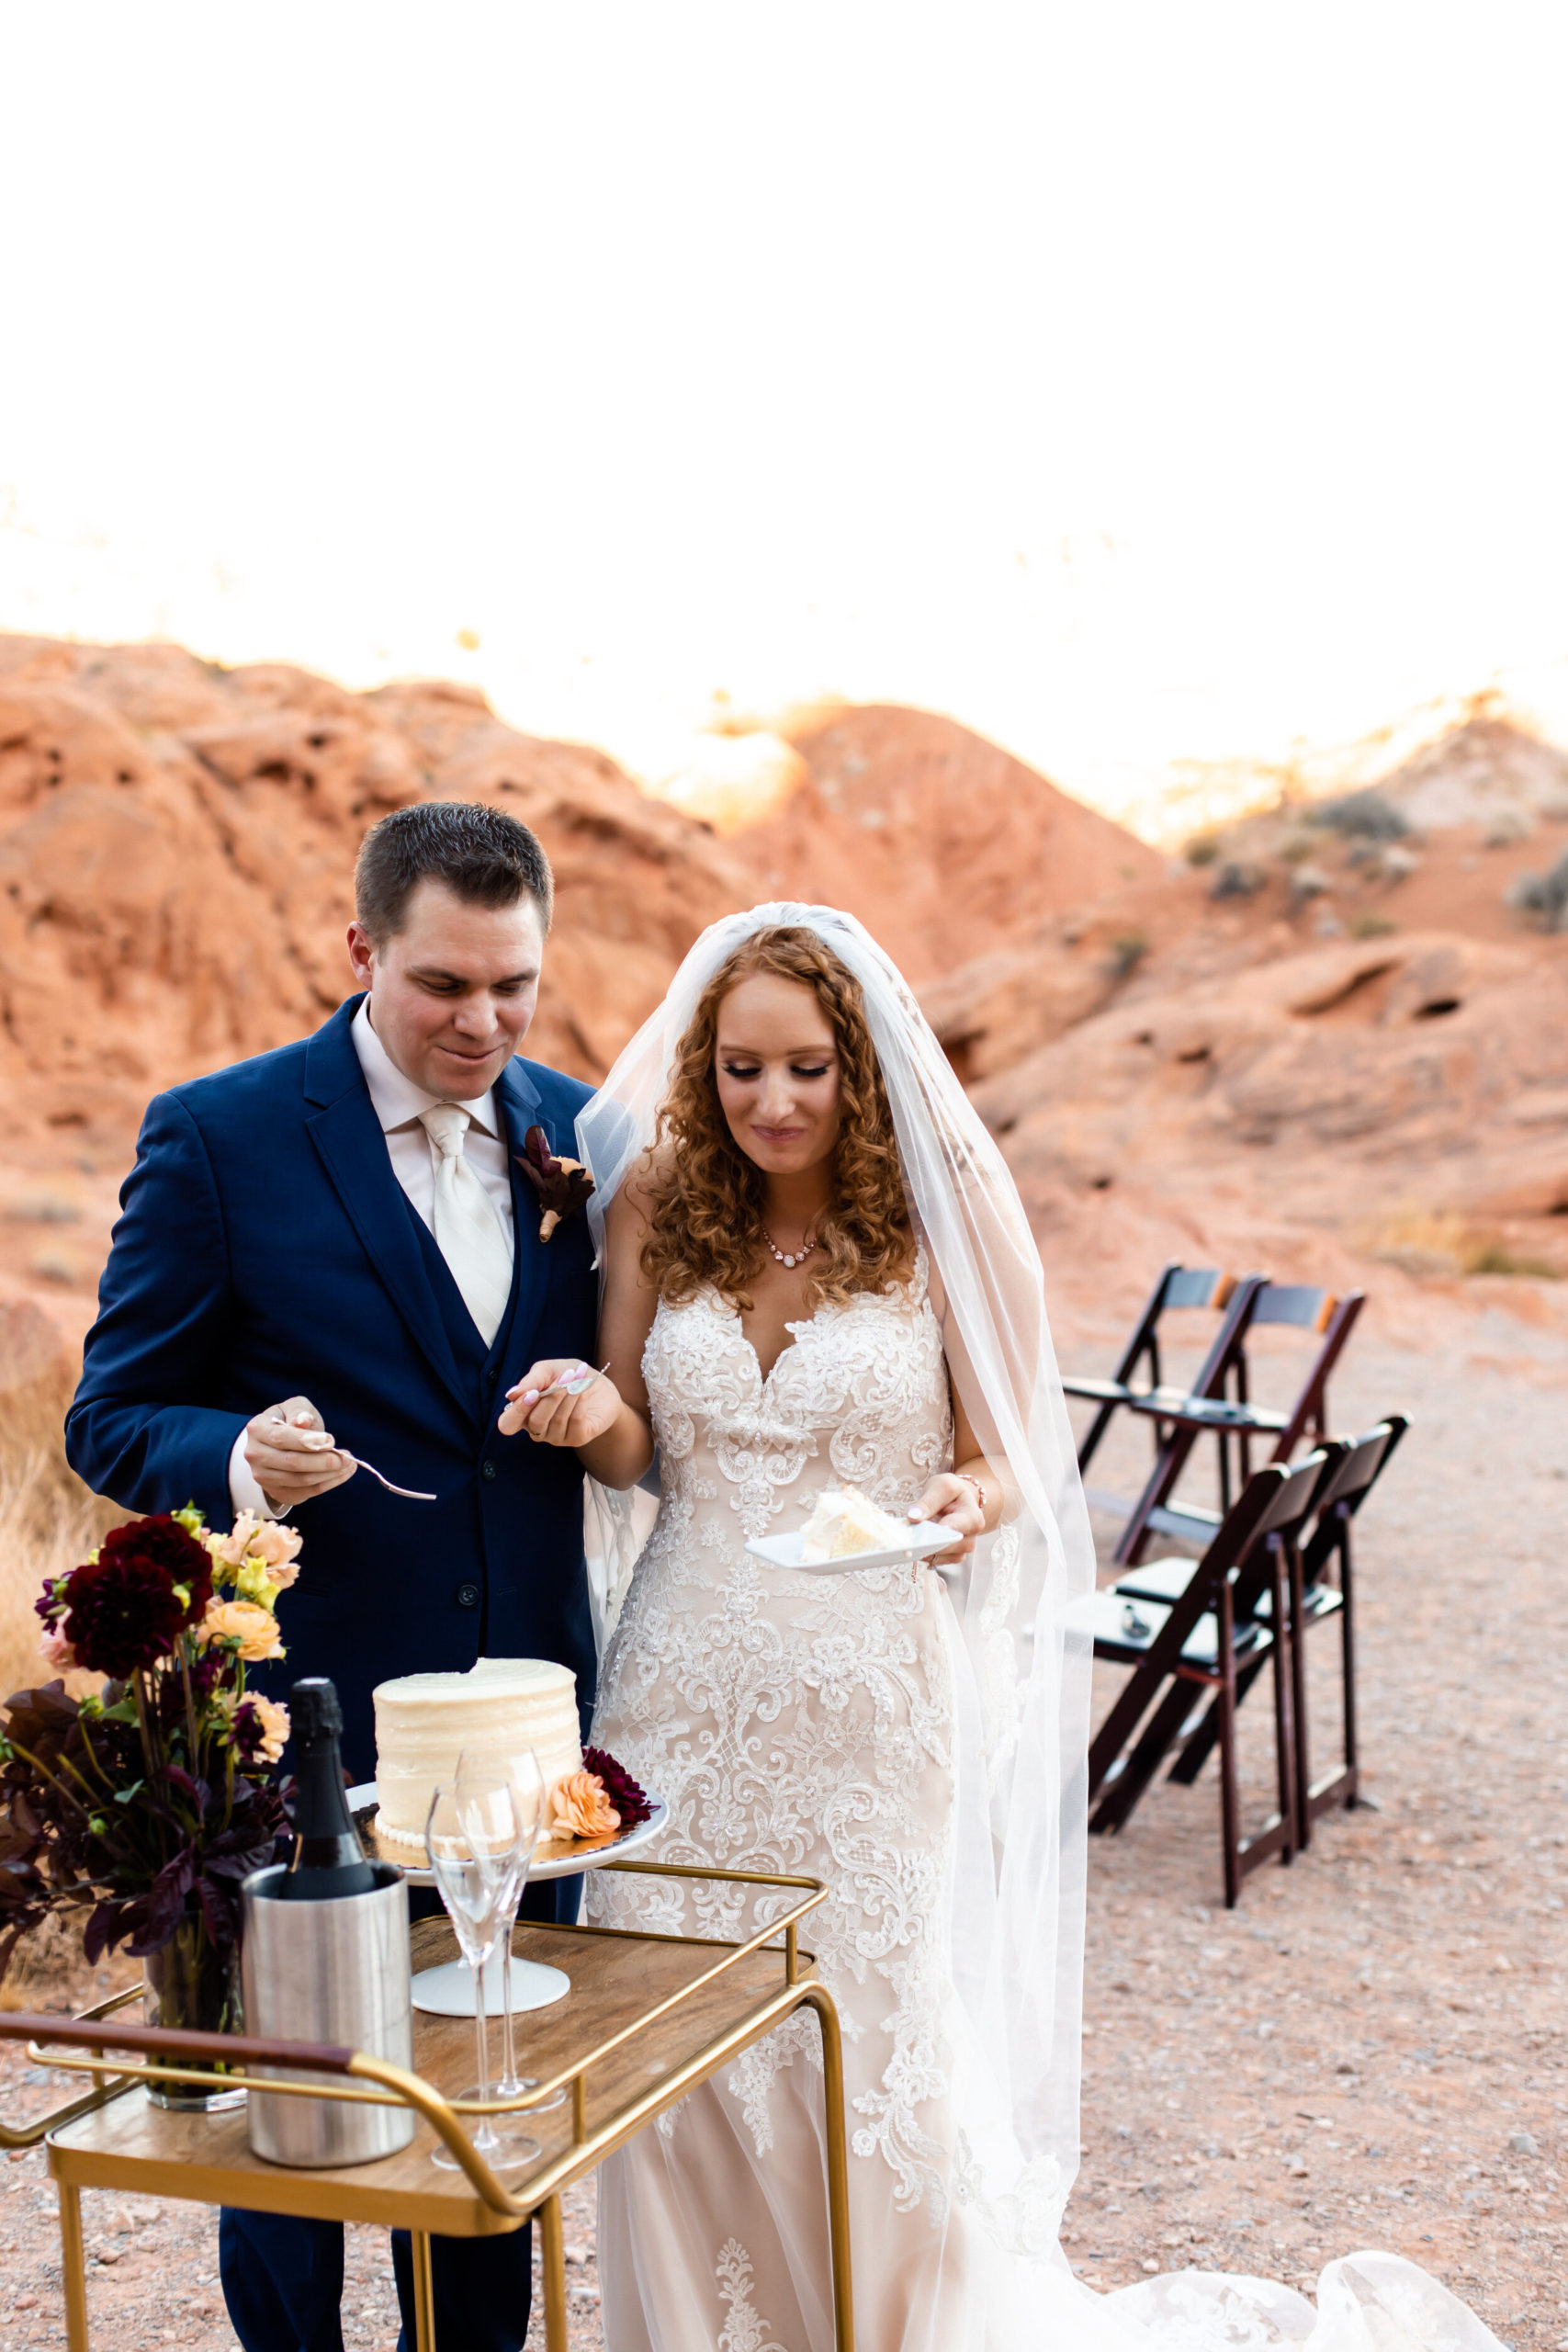 Valley of Fire Elopement | Las Vegas Elopement Photographer | Cake Cutting at Wedding